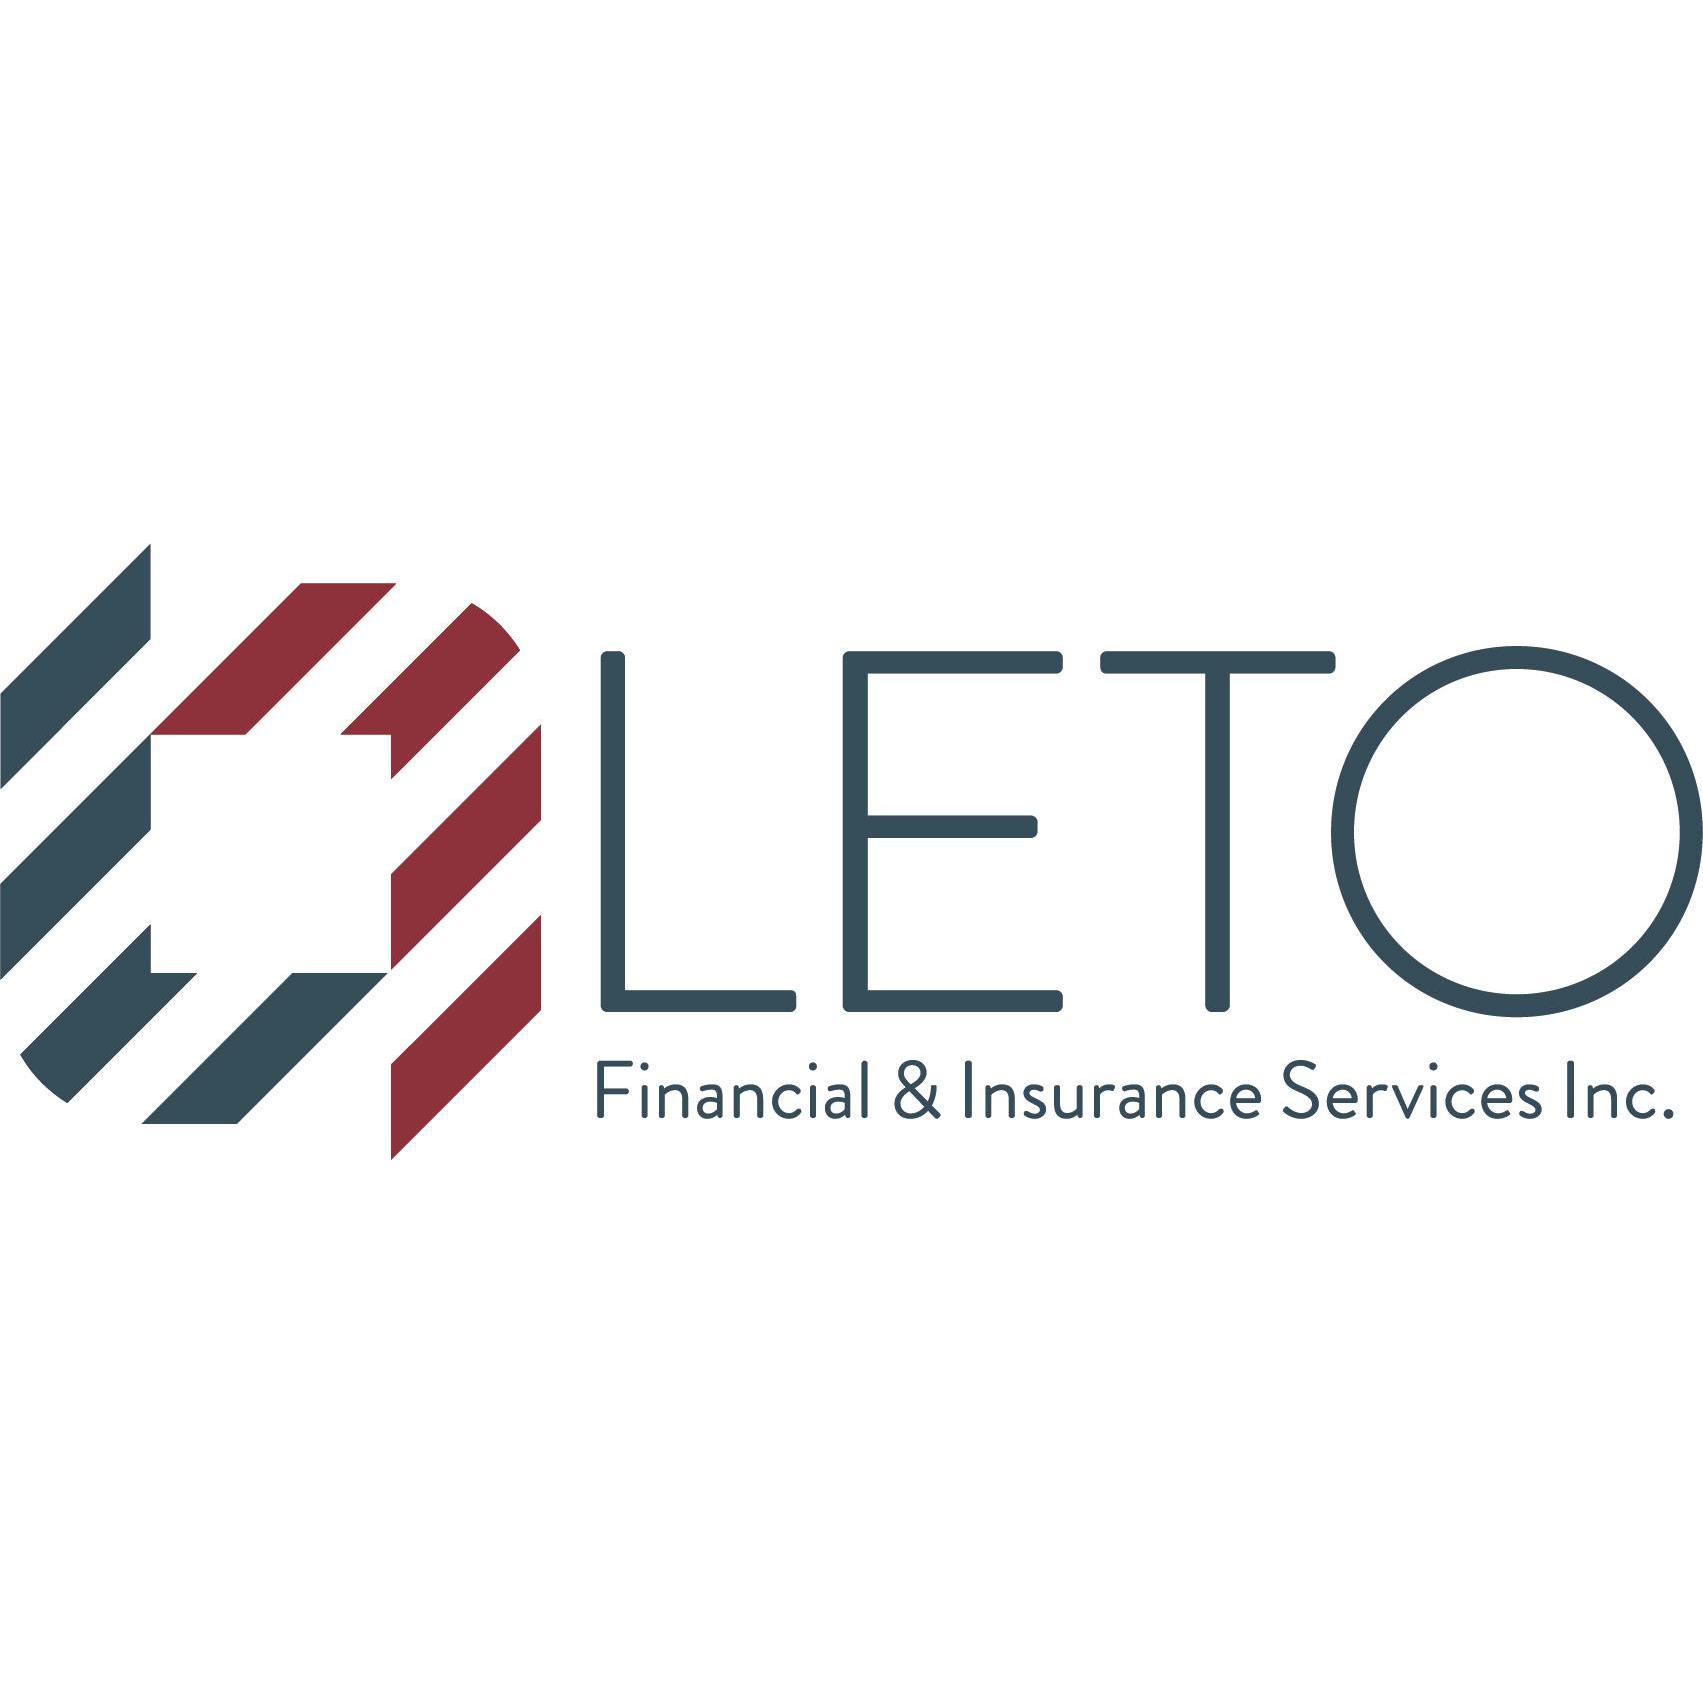 Leto Financial & Insurance Services Inc. - Riverside, CA 92506 - (833)240-5129 | ShowMeLocal.com